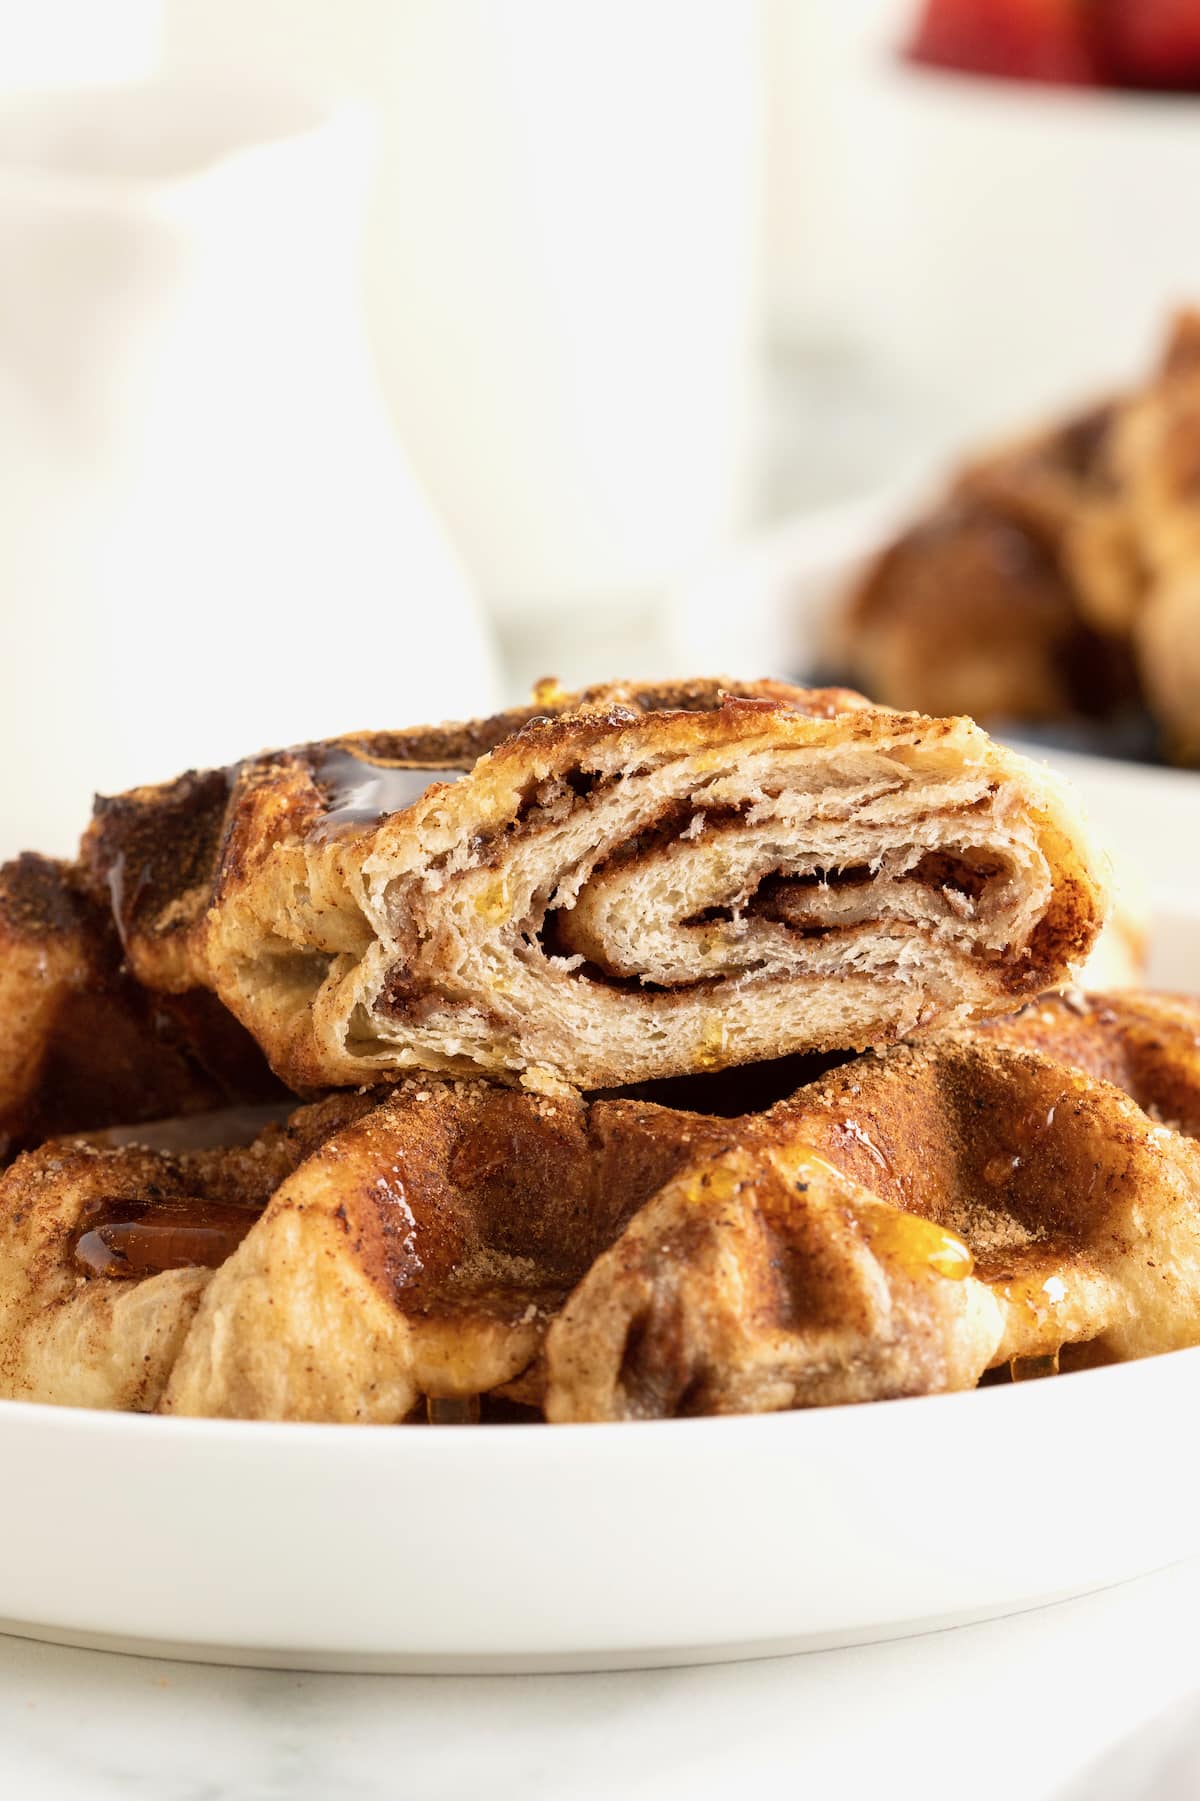 A cinnamon sugar Croffles cut in half to reveal layers of pastry and cinnamon sugar filling.